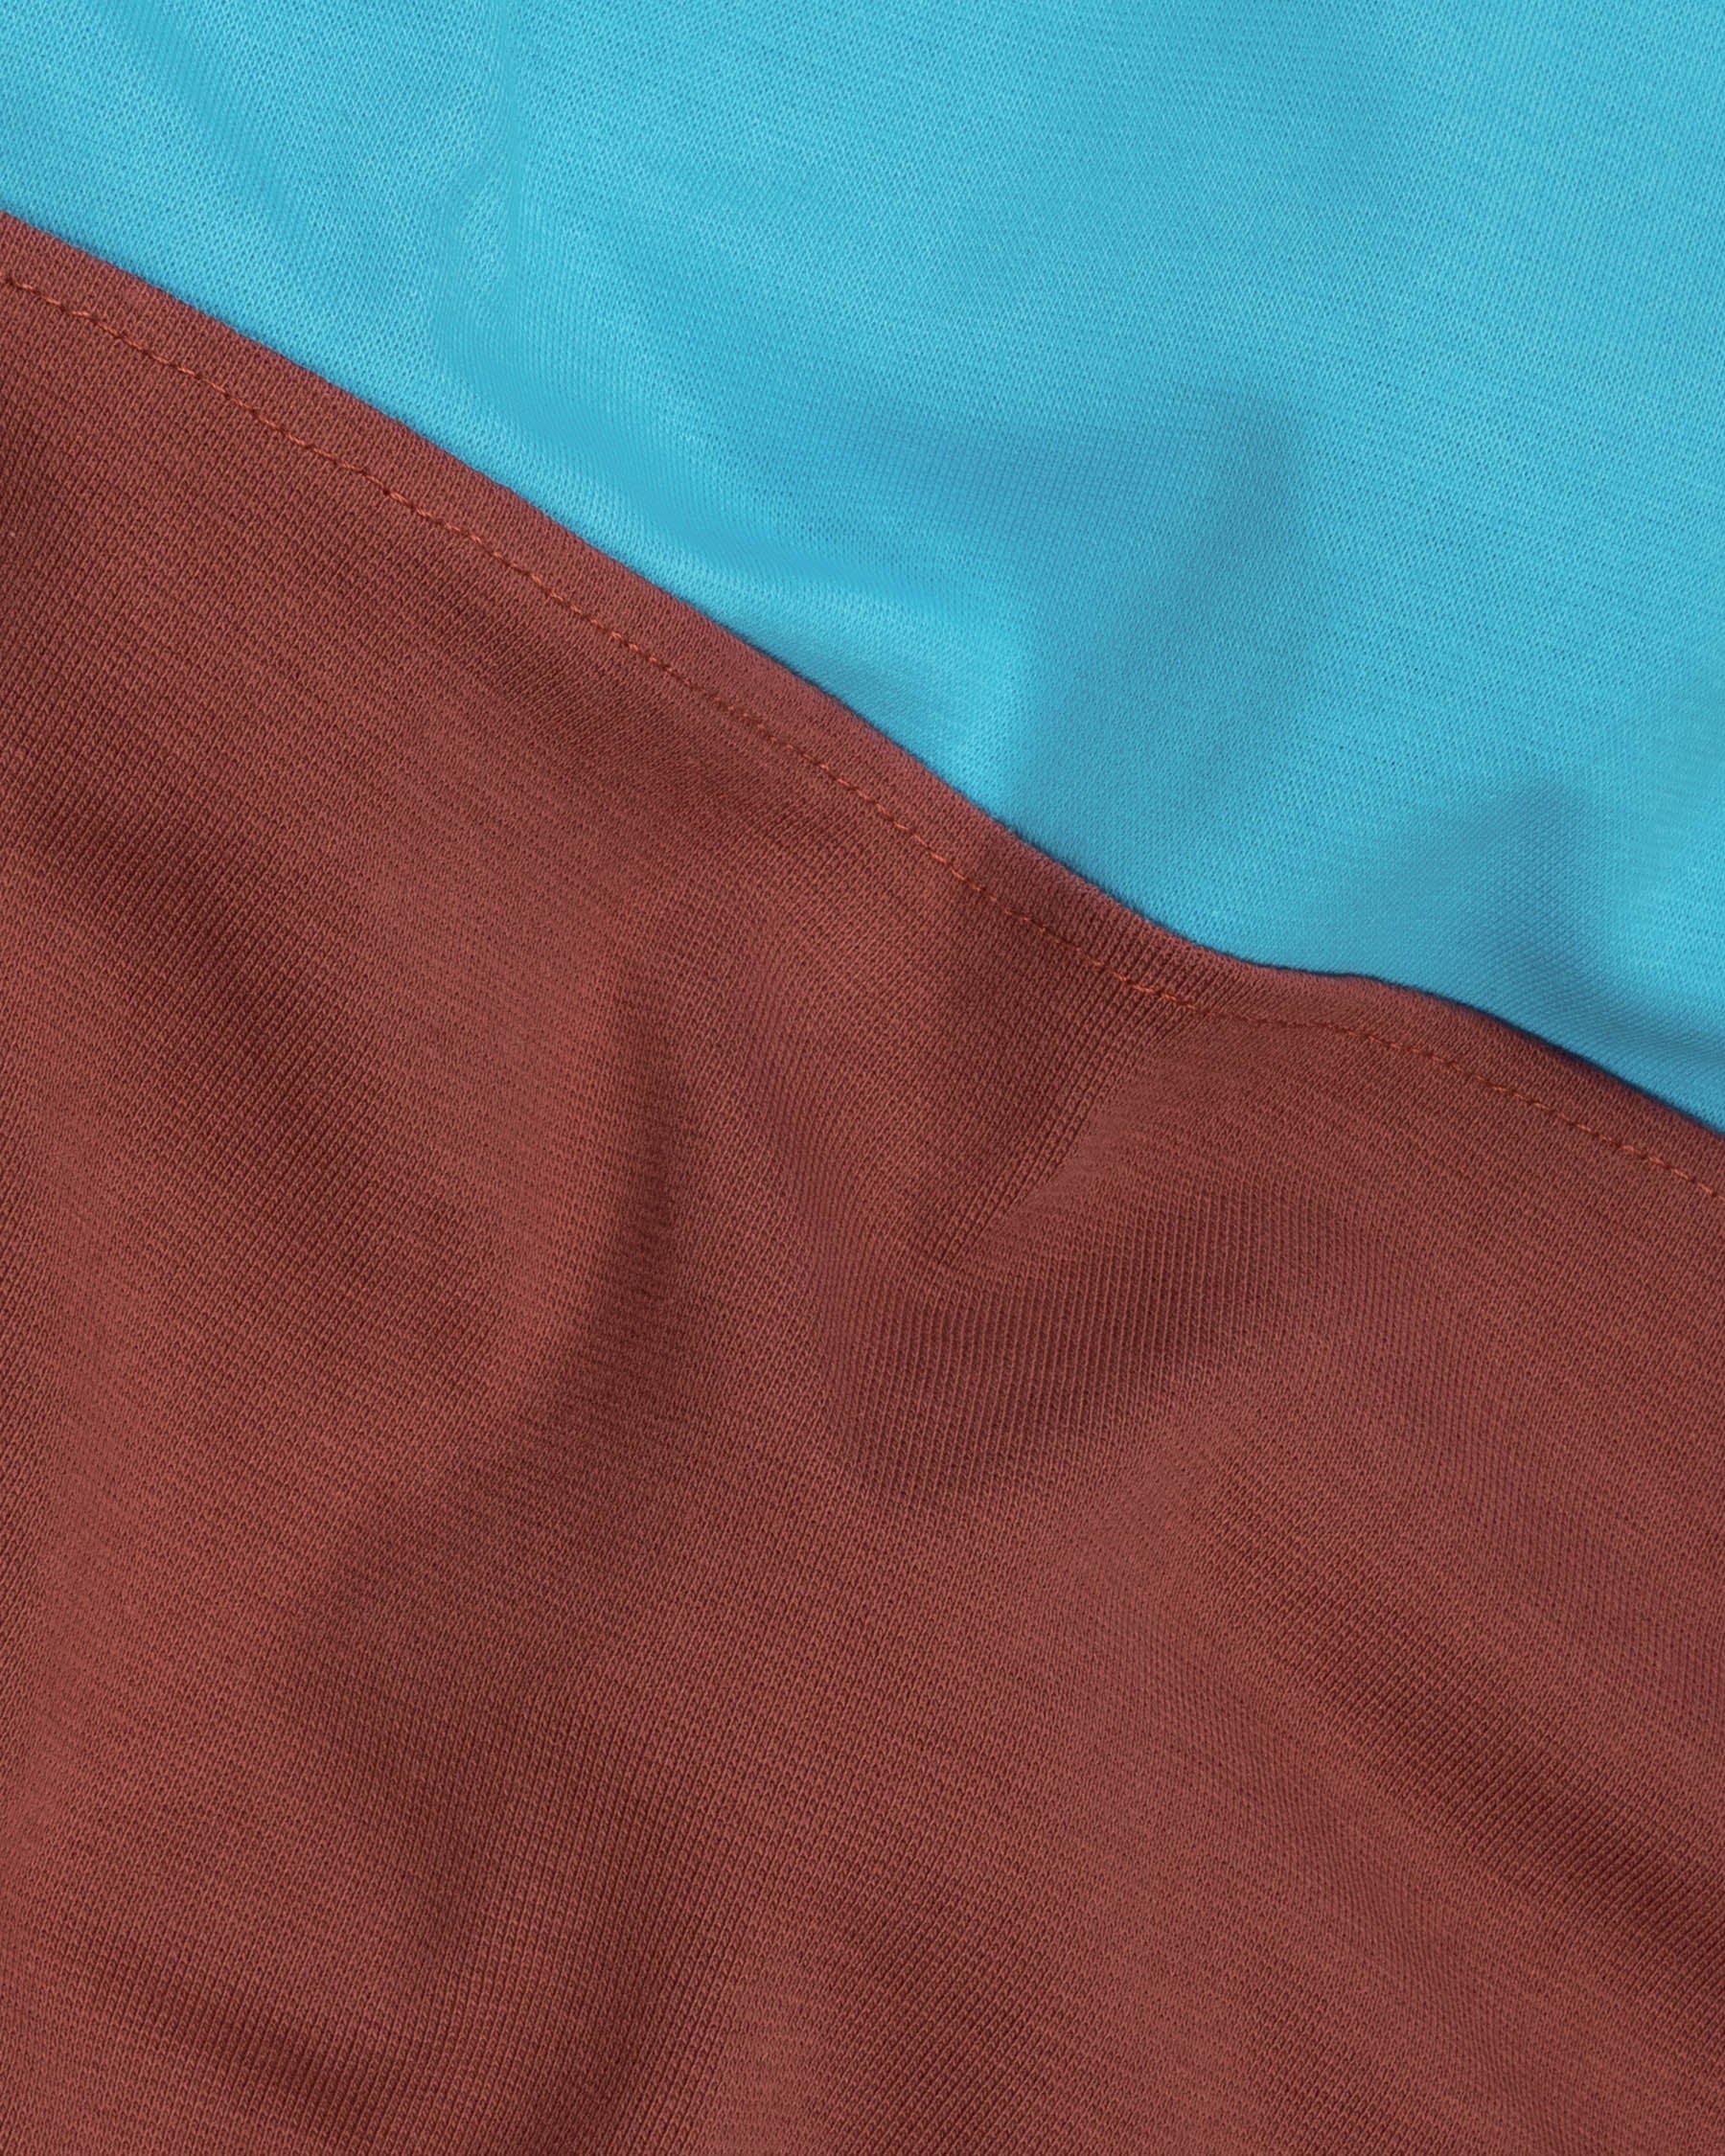 Kenyan Copper and Picton Blue Super Soft Premium Jersey Sweatshirt TS516-S, TS516-M, TS516-L, TS516-XL, TS516-XXL